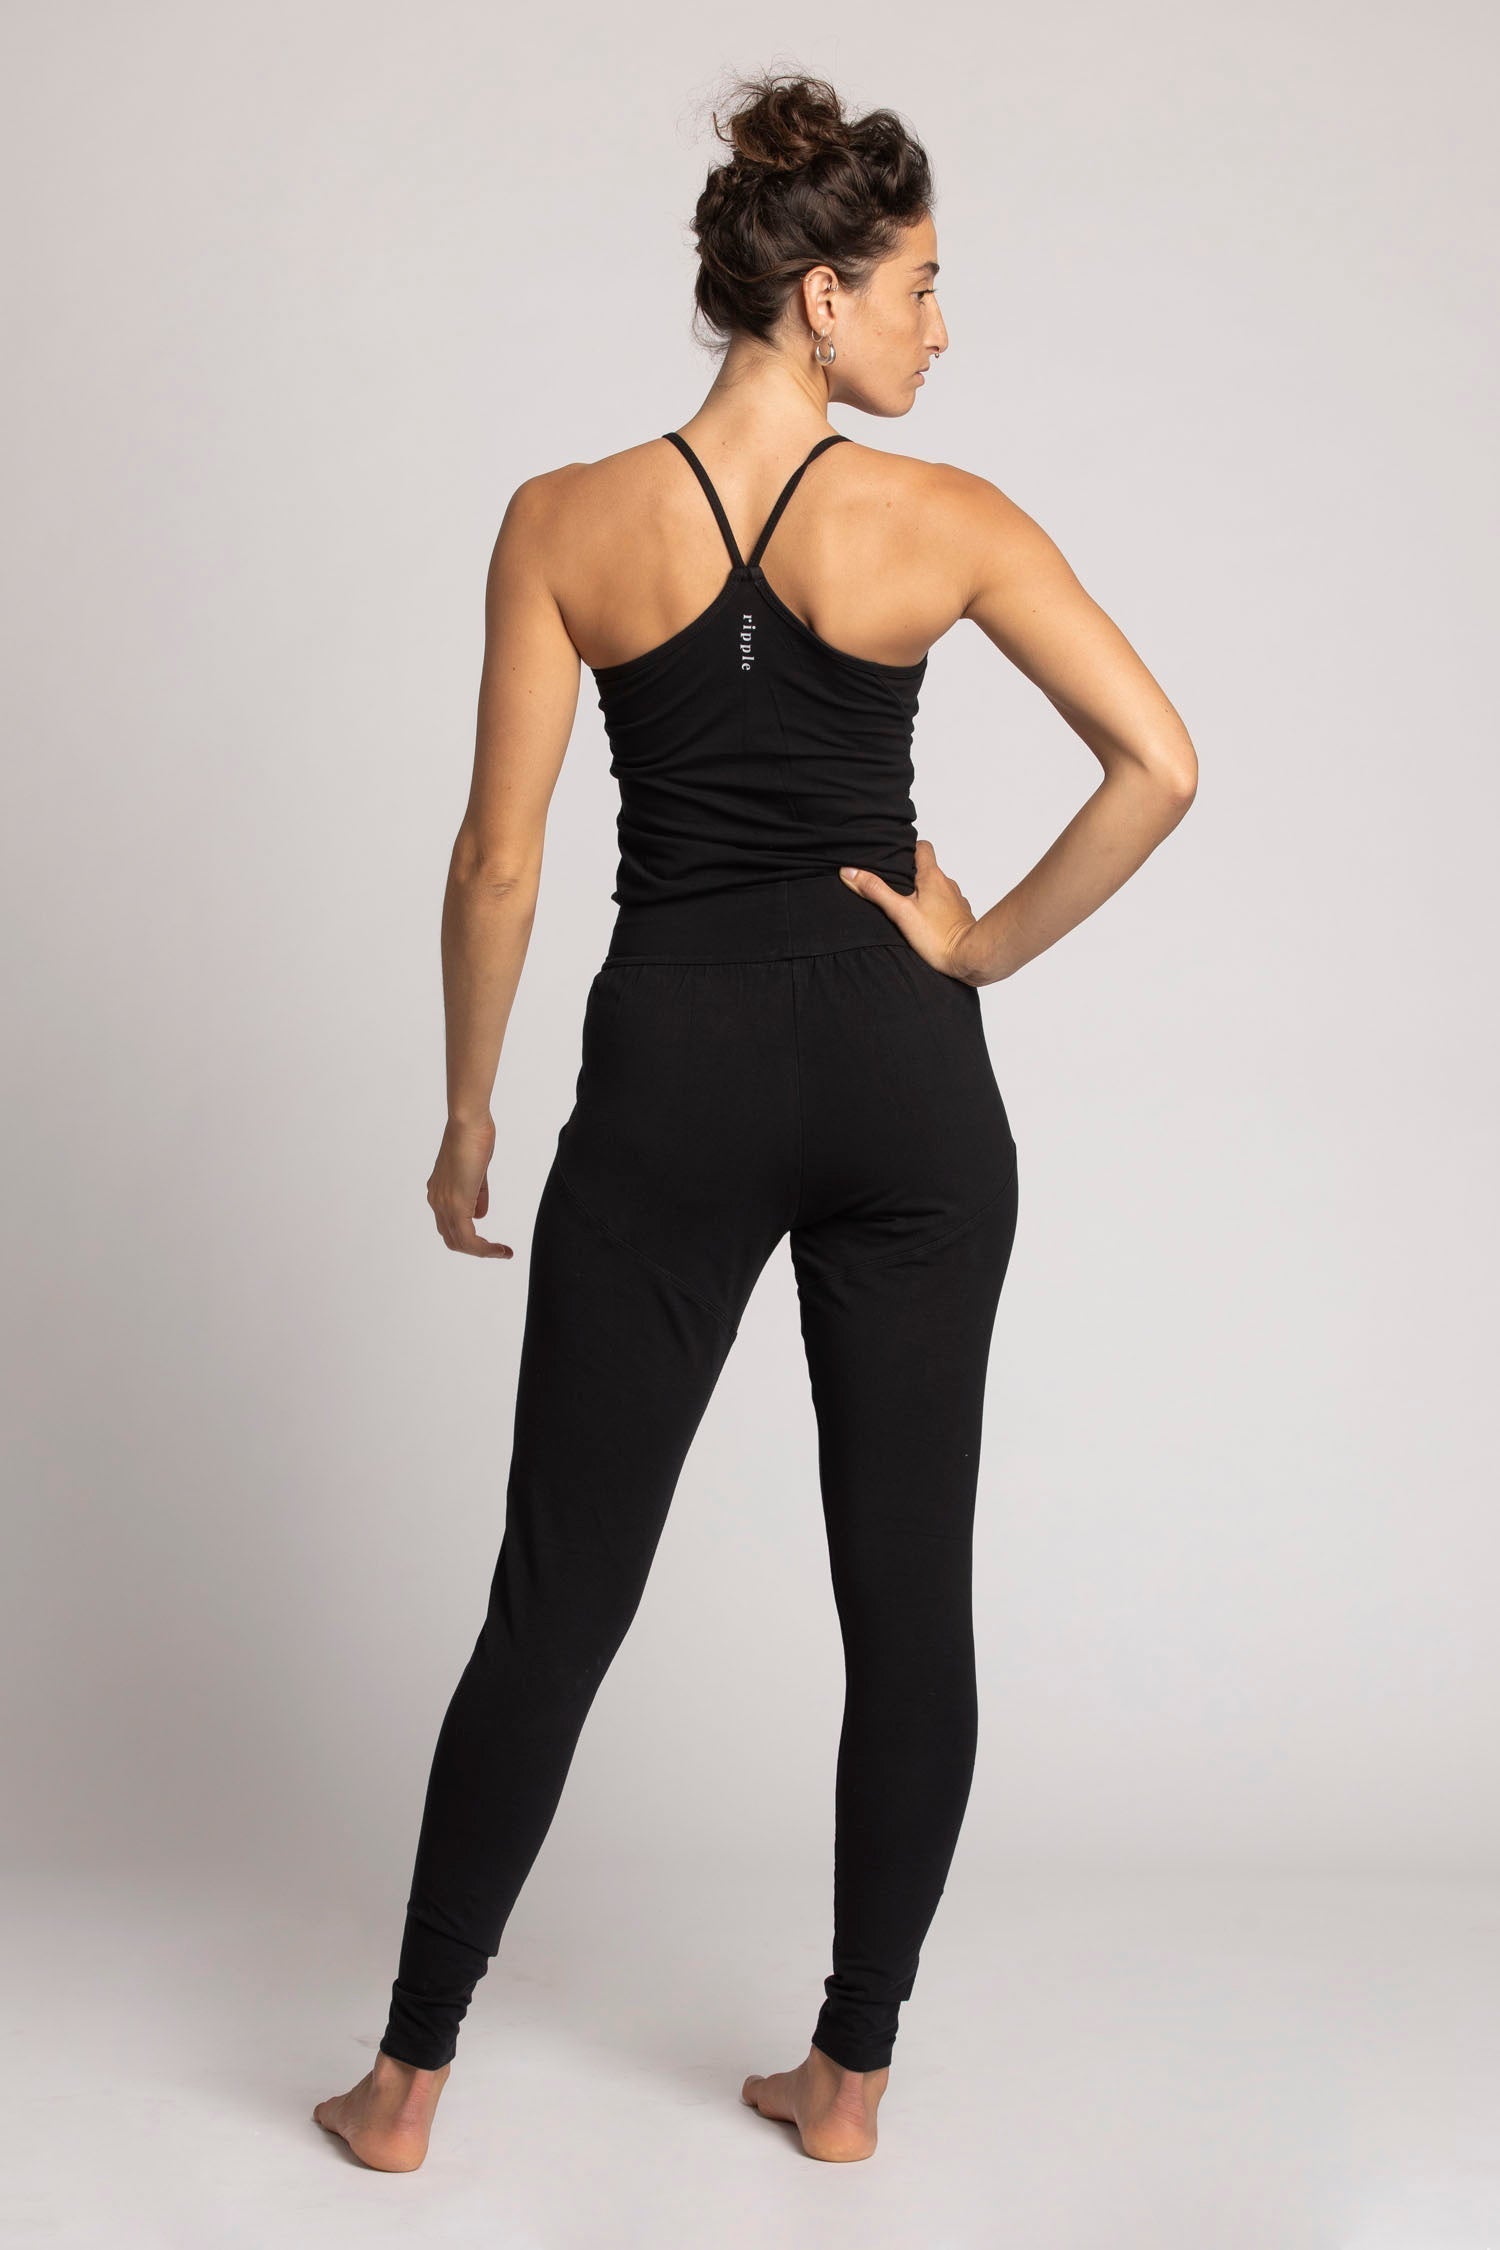 Black Yoga Romper Open Back Organic Cotton Workout Jumpsuit XS-OX -   New Zealand